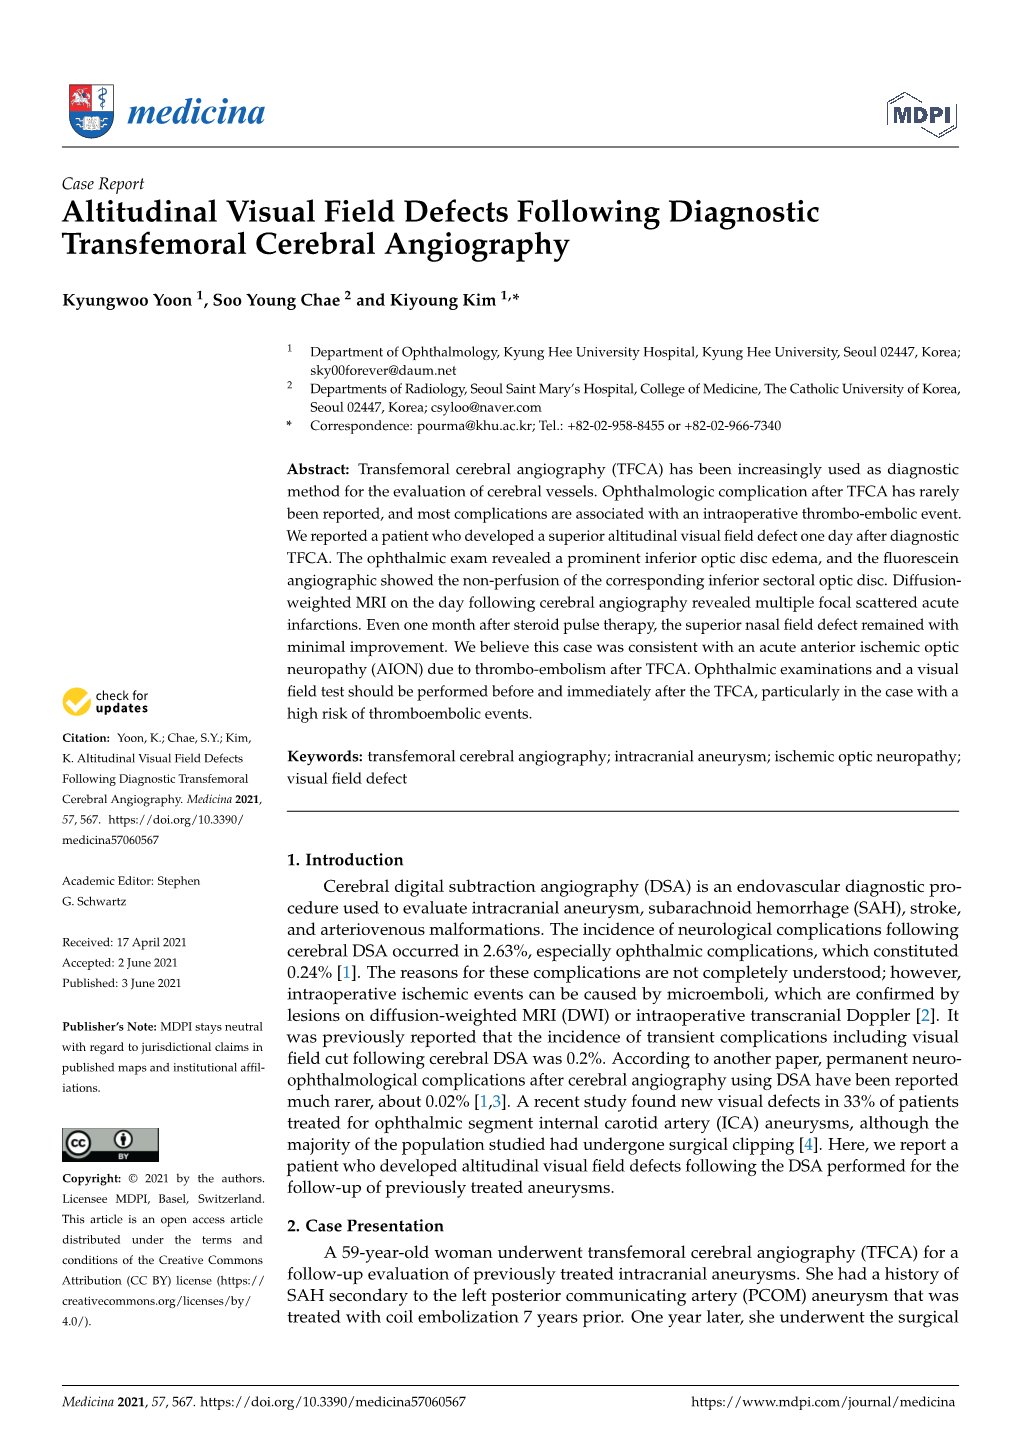 Altitudinal Visual Field Defects Following Diagnostic Transfemoral Cerebral Angiography